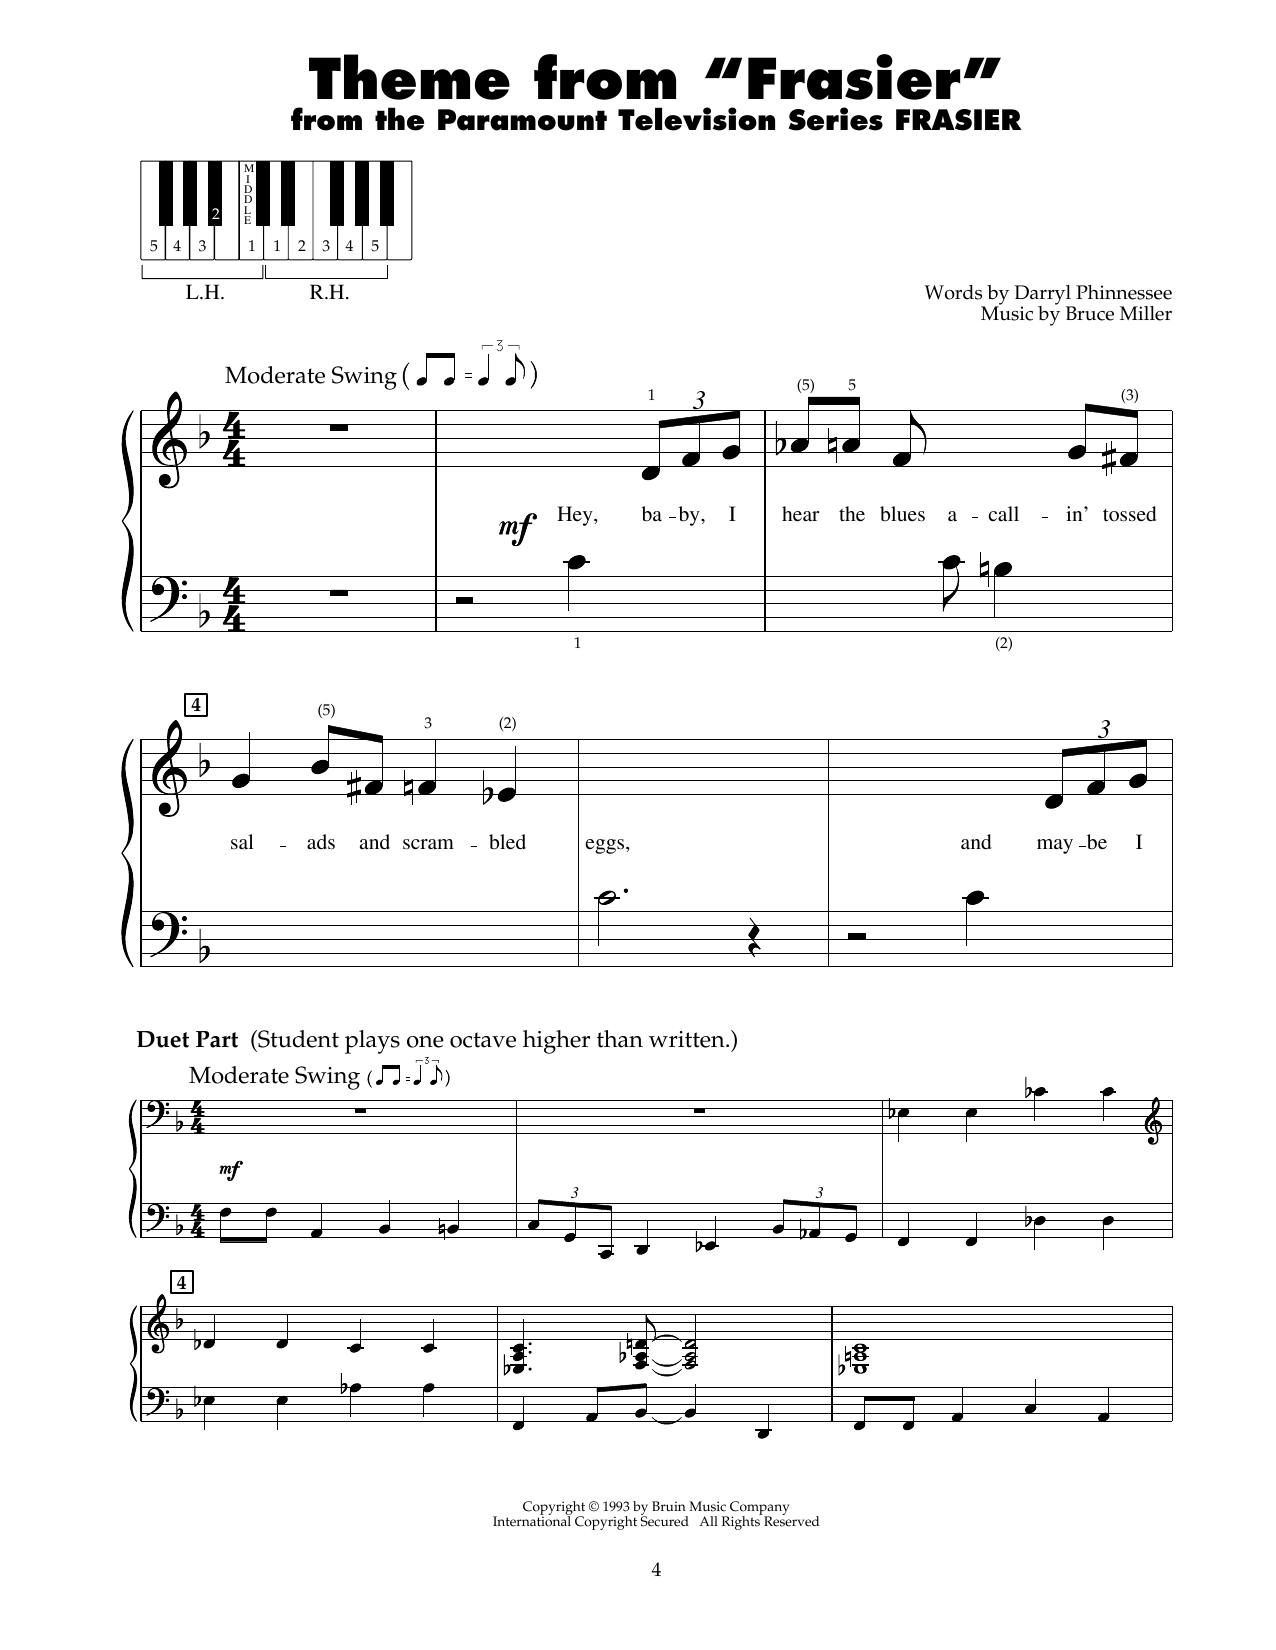 Bruce Miller Fraiser - End Title (Theme from Fraiser) Sheet Music Notes & Chords for 5-Finger Piano - Download or Print PDF